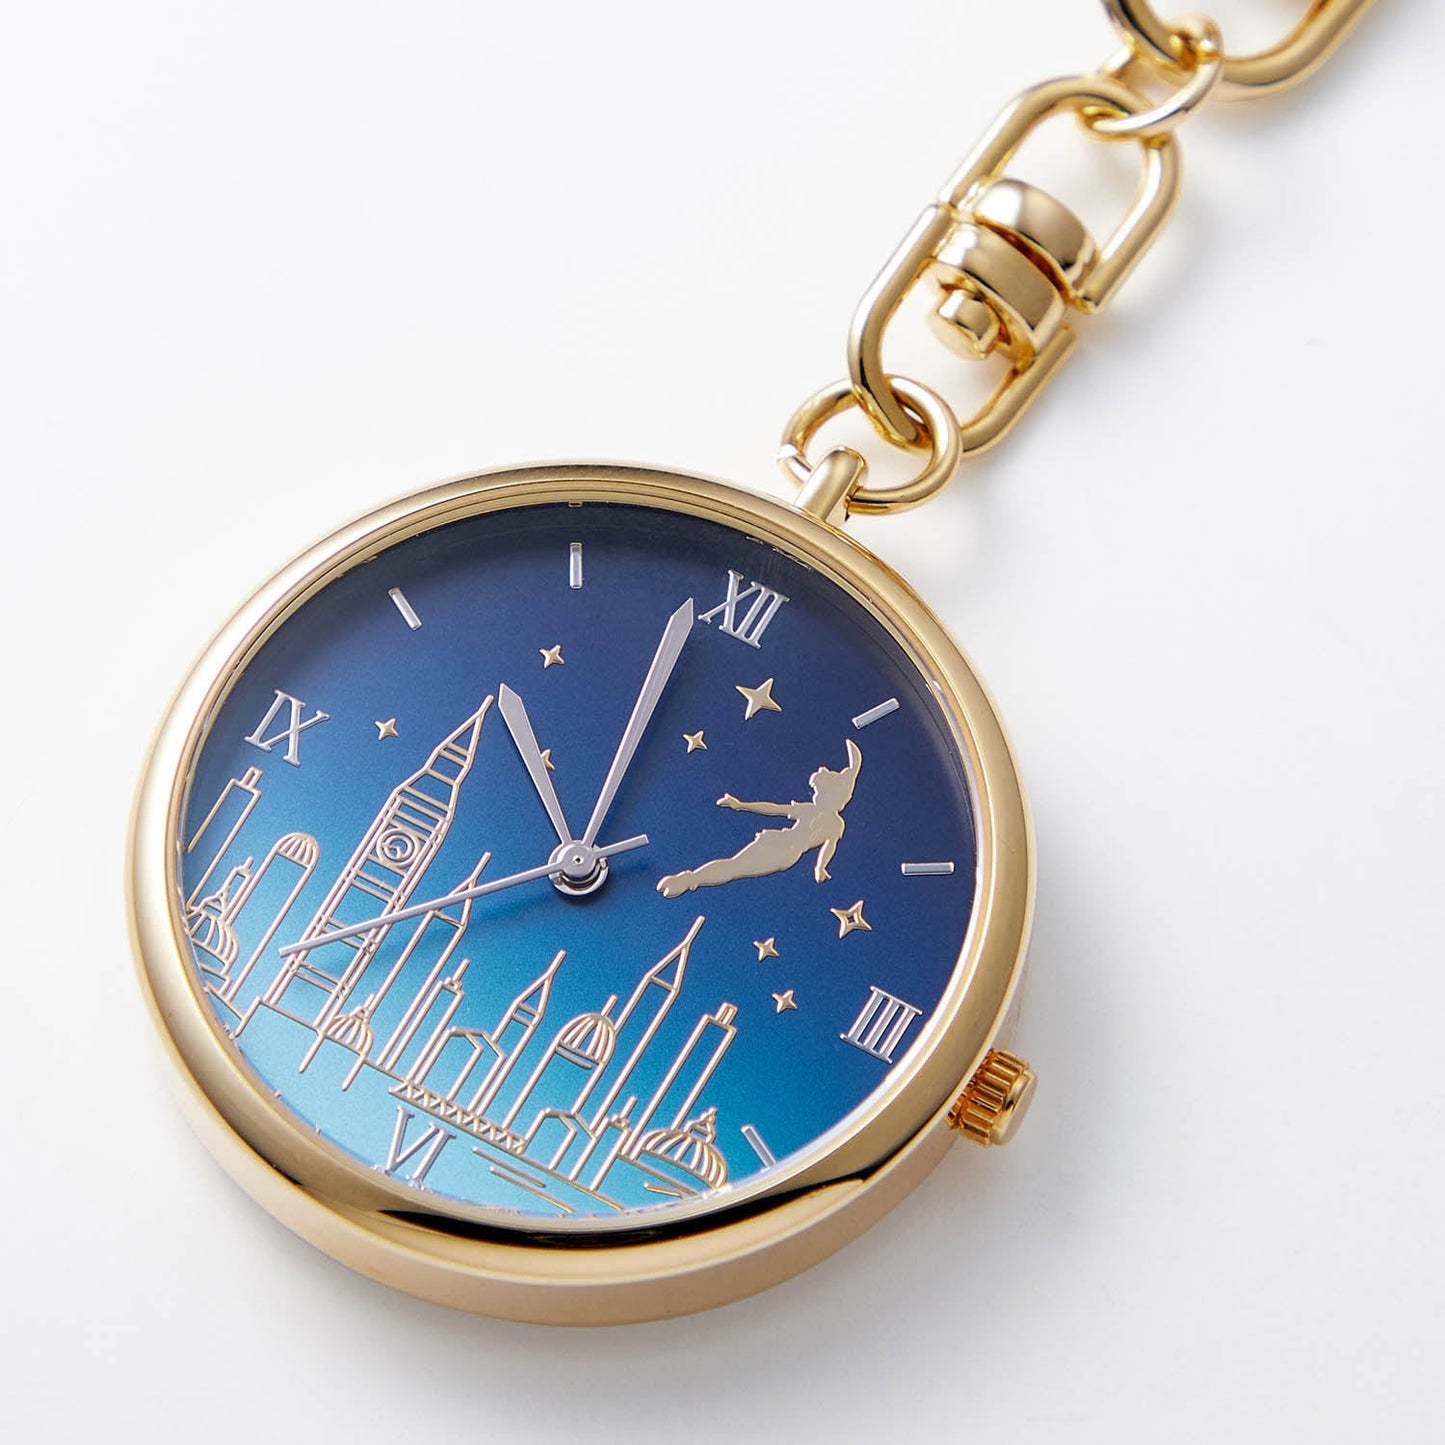  Peter Pan pendant watch movement made in Japan 